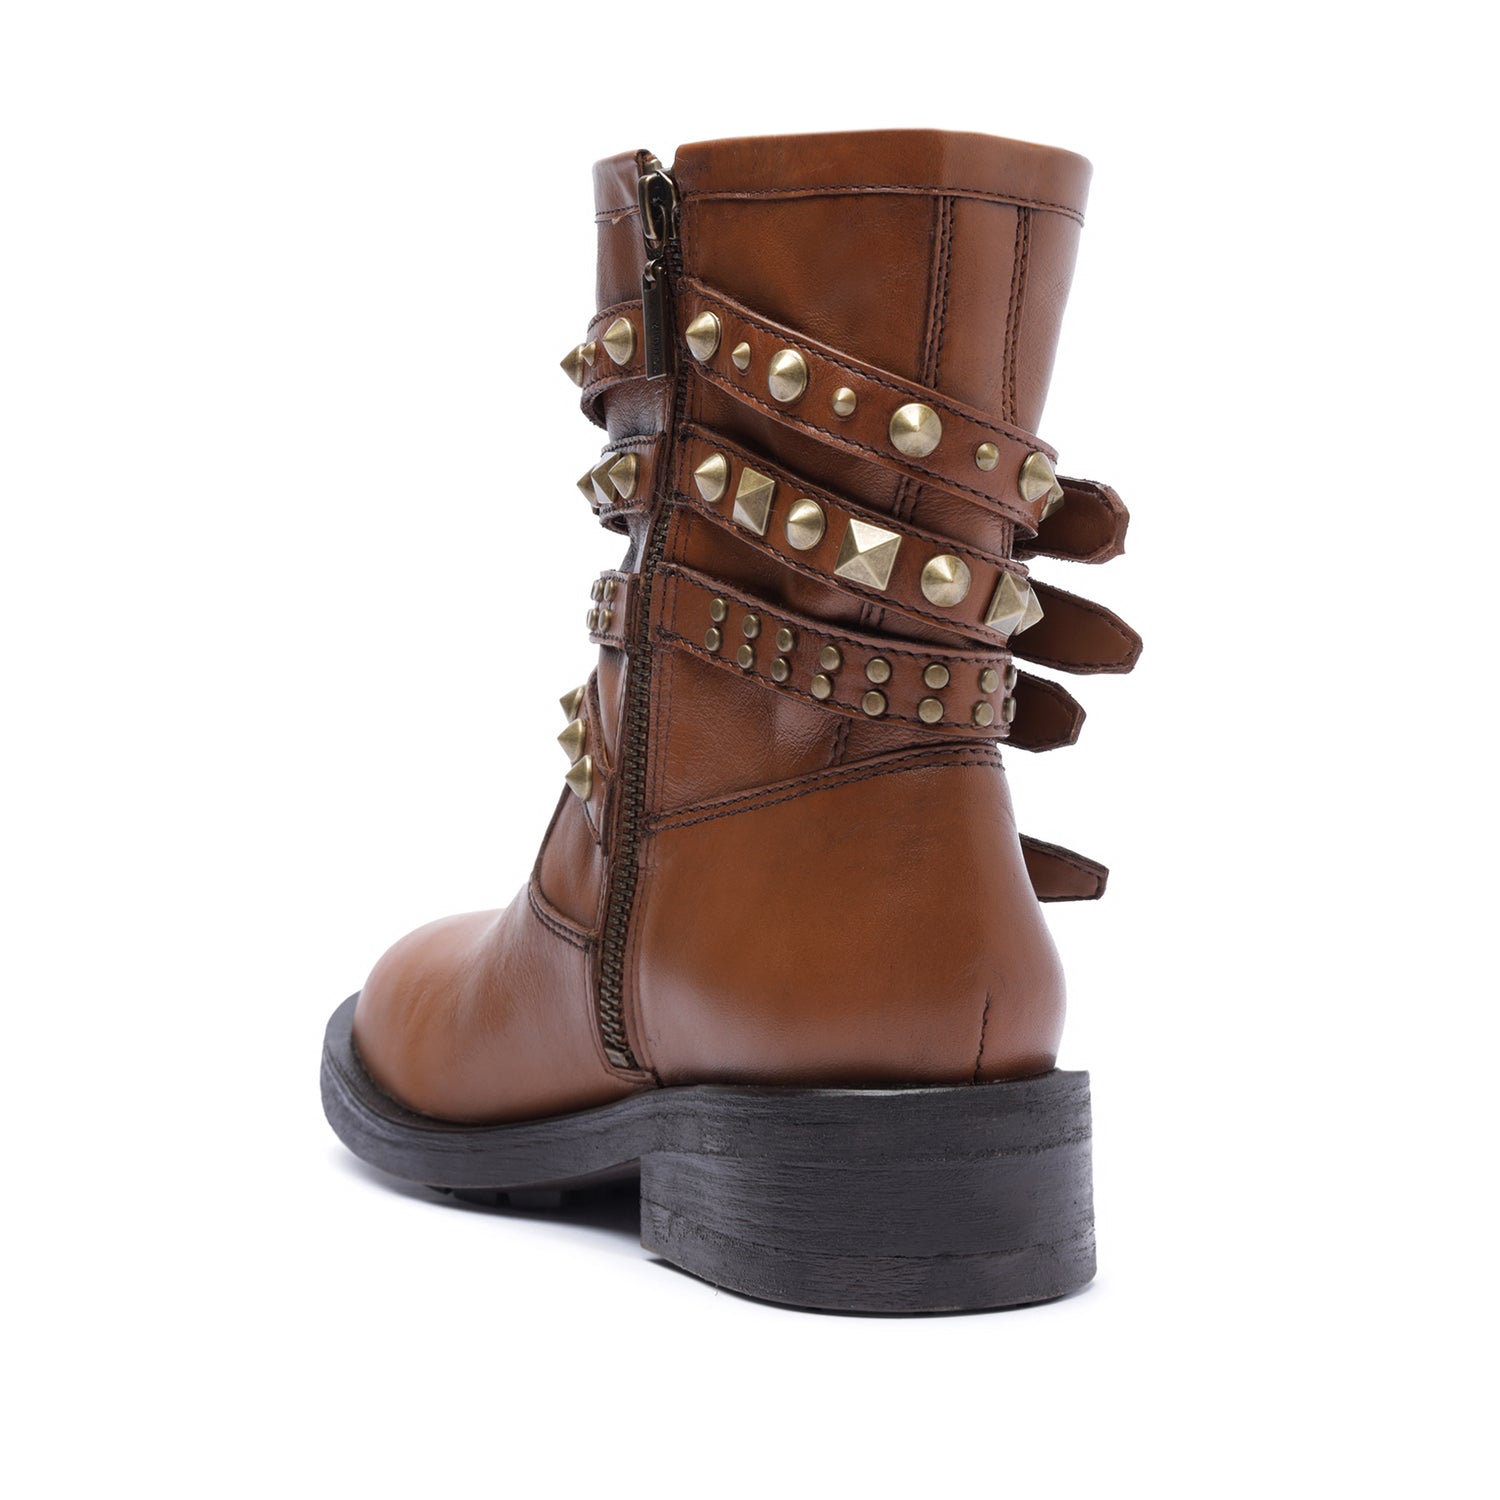 Luizia Graxo Leather Bootie Booties Pre Fall 23    - Schutz Shoes